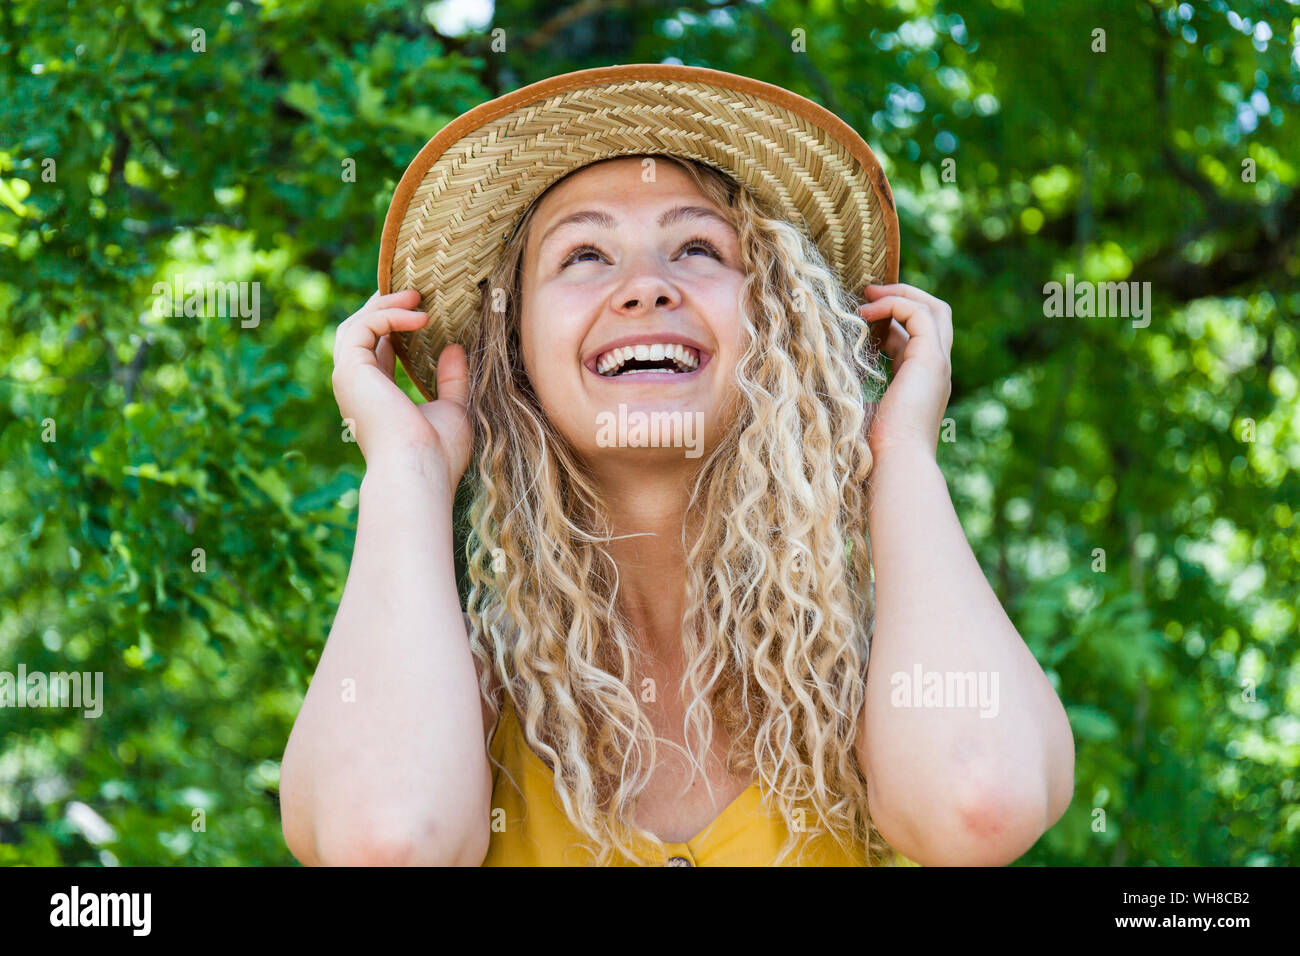 Portrait of smiling woman wearing straw hat, mains sur hat Banque D'Images